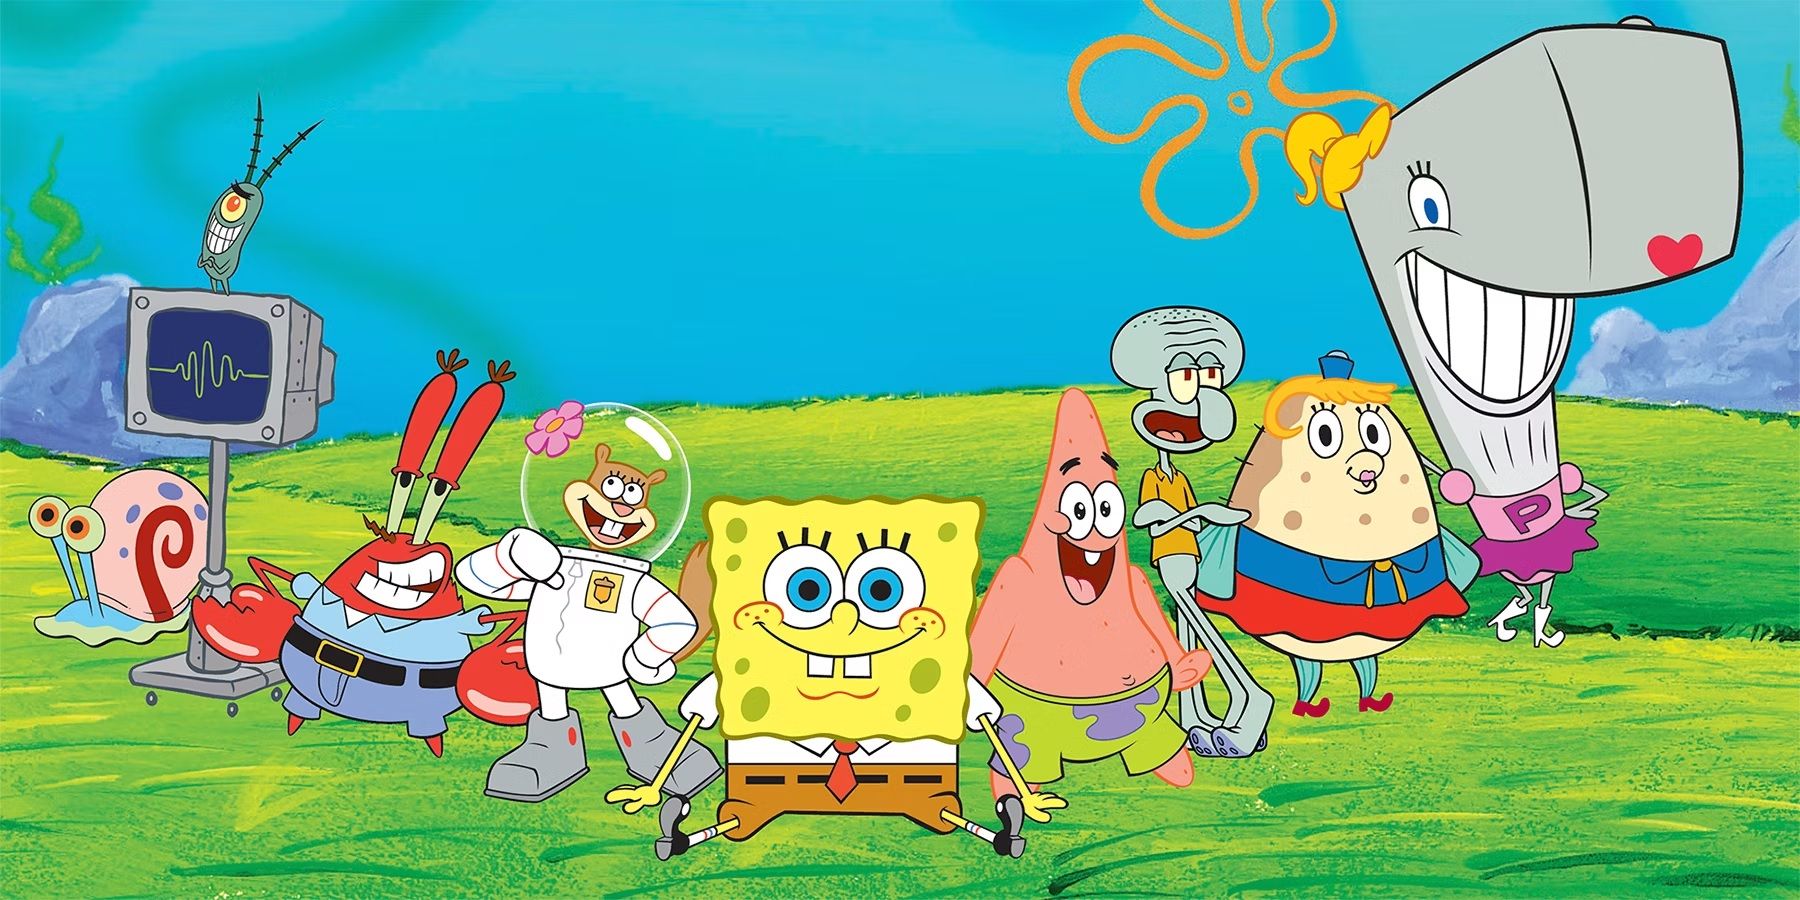 SpongeBob Squarepants characters posing together